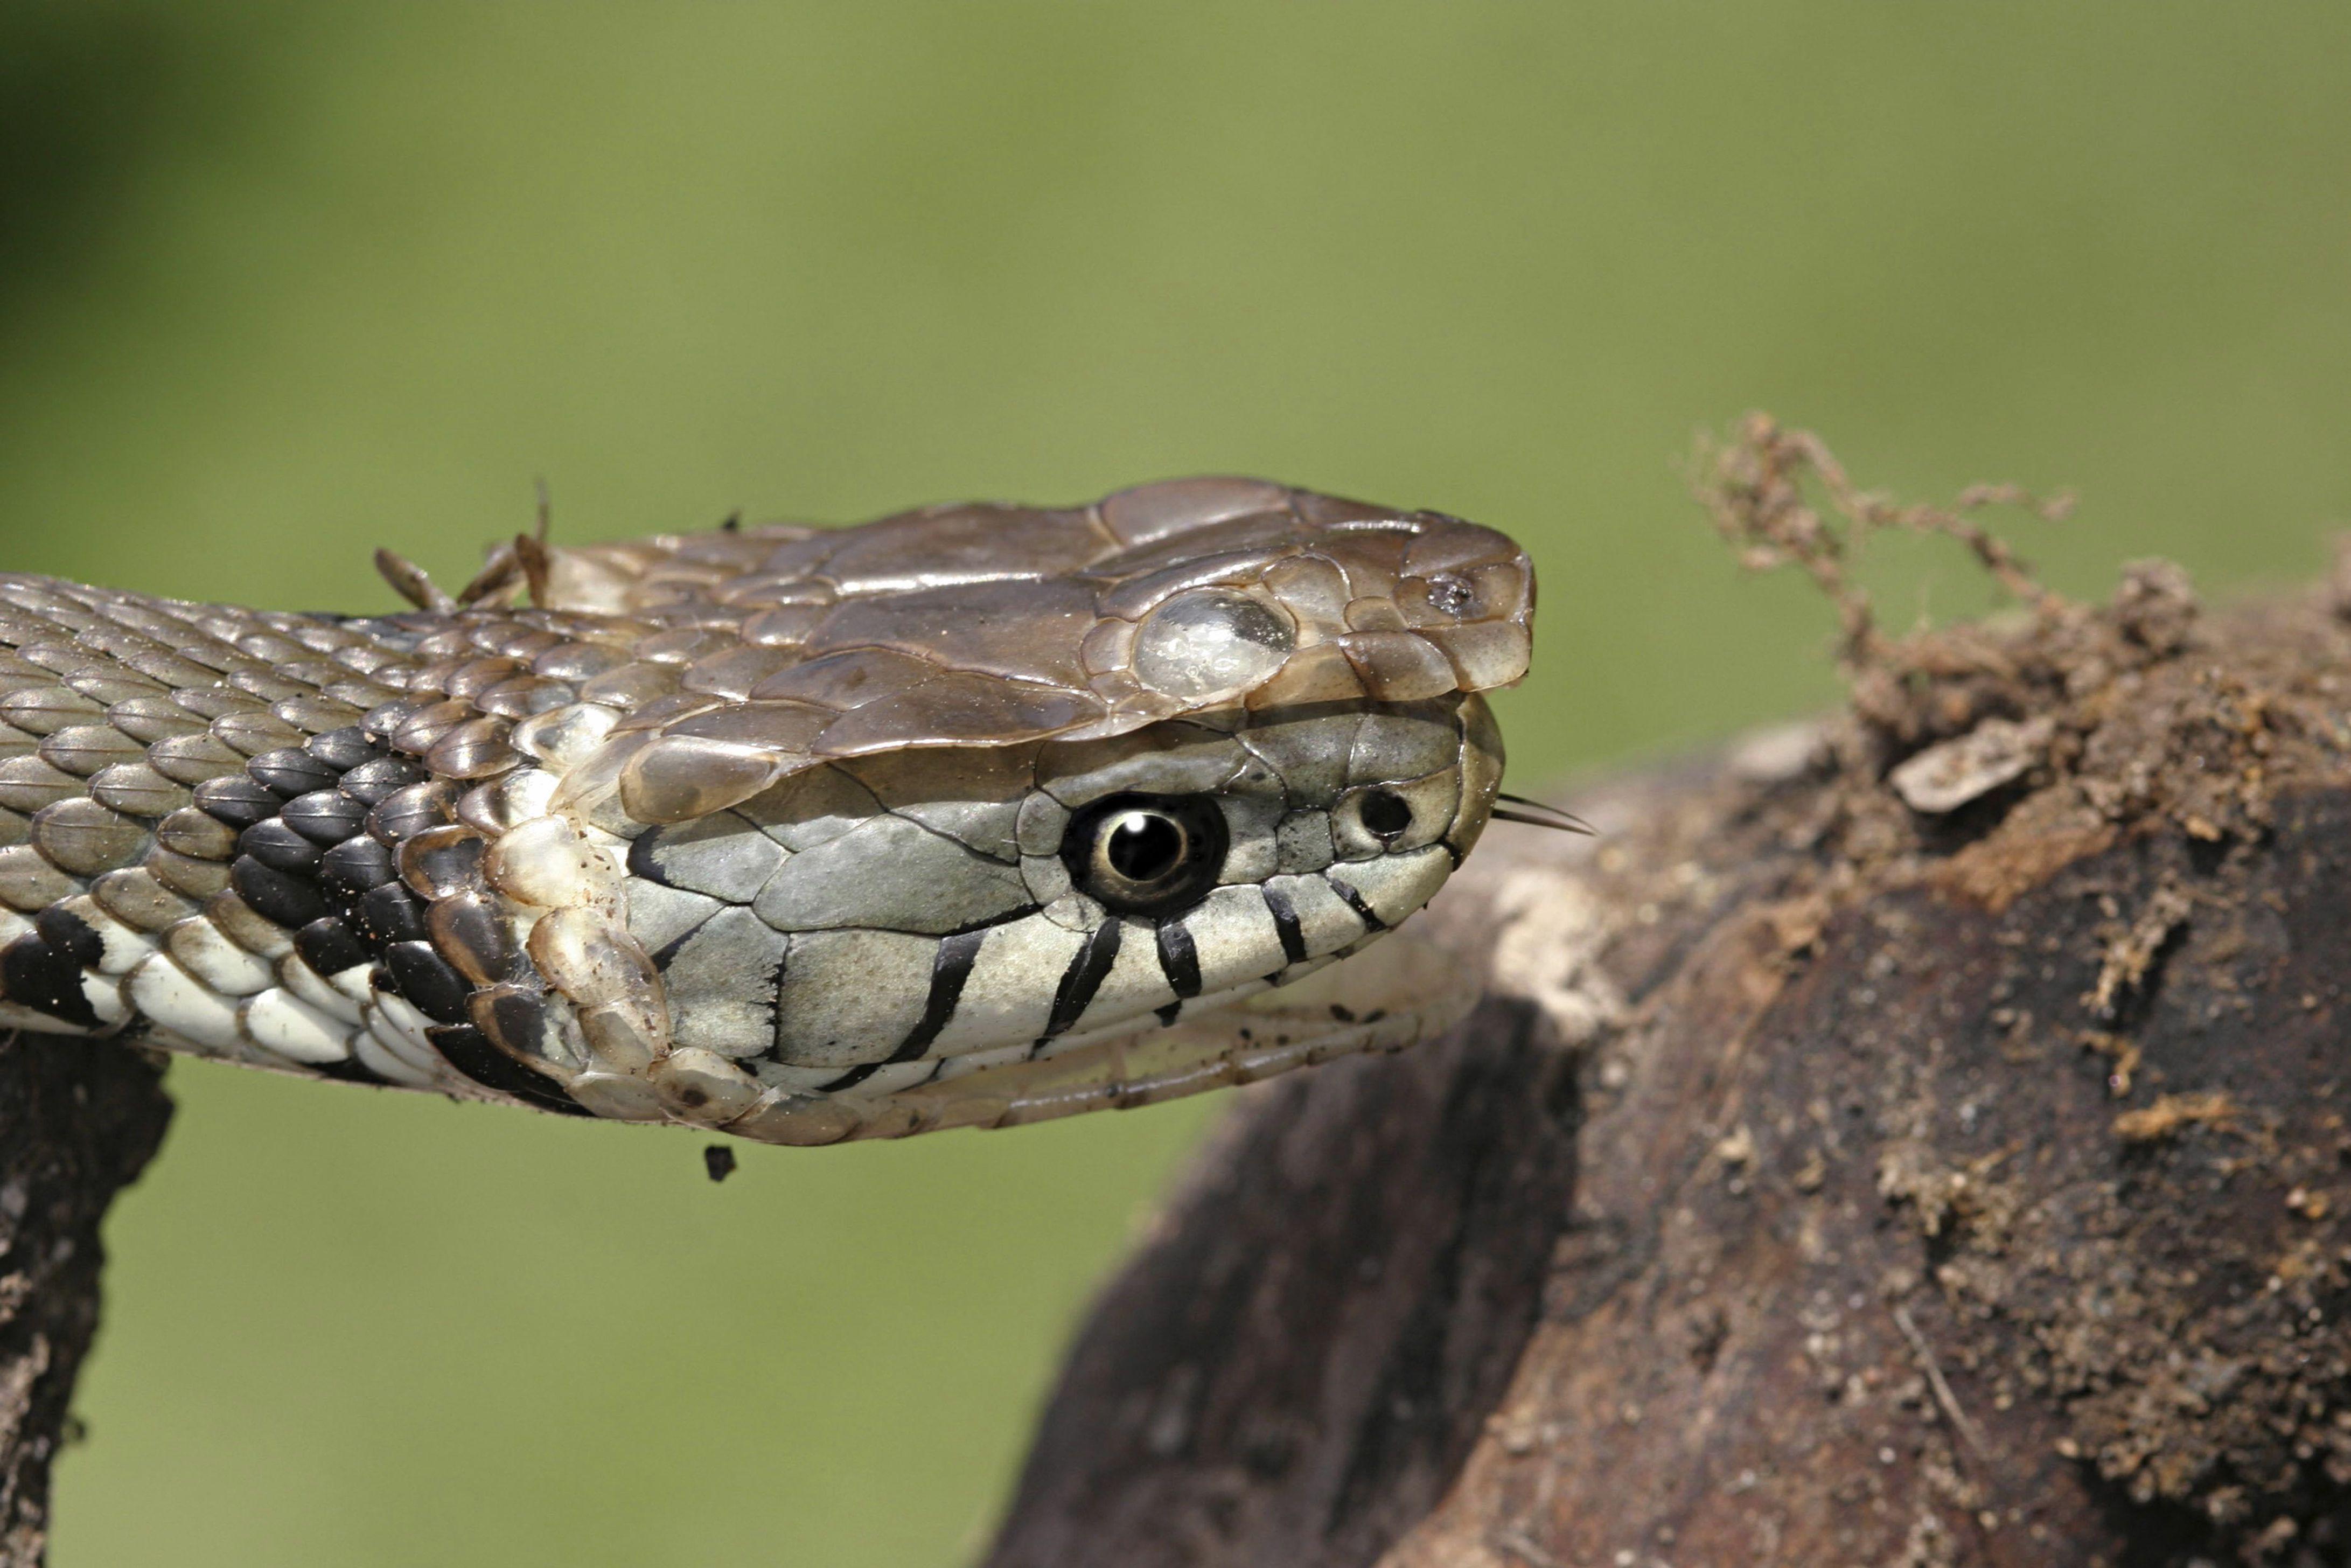 Ringed Snake (Grass Snake) sloughing. Shedding its skin. Natrix natrix